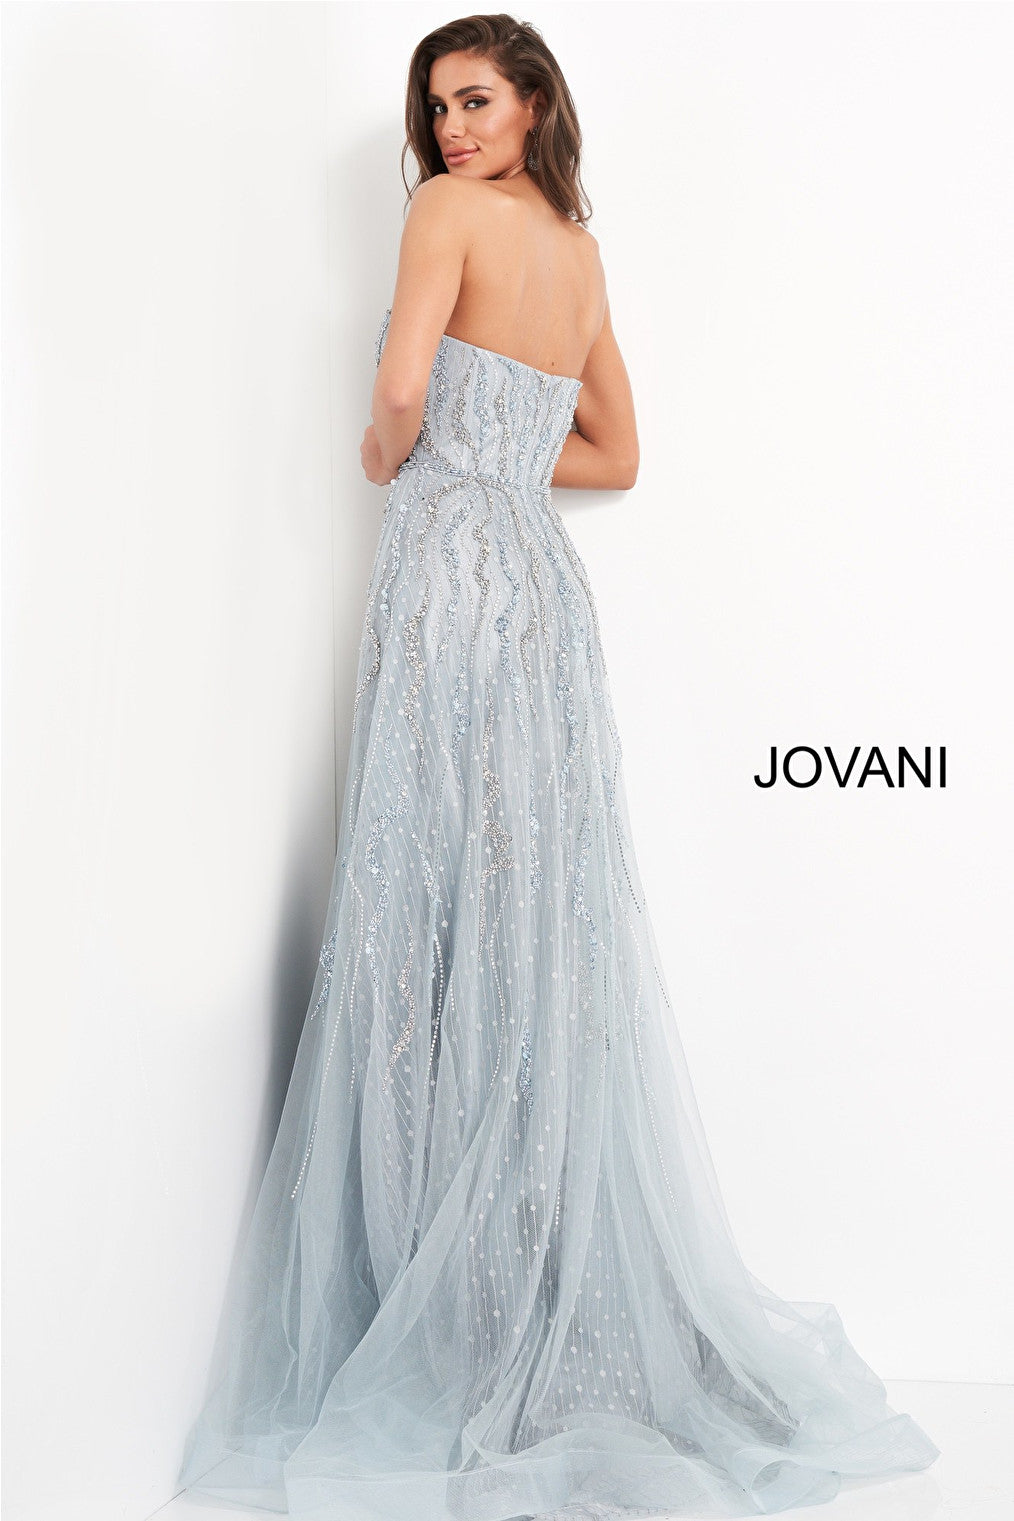 Strapless beaded blue evening dress Jovani 04633